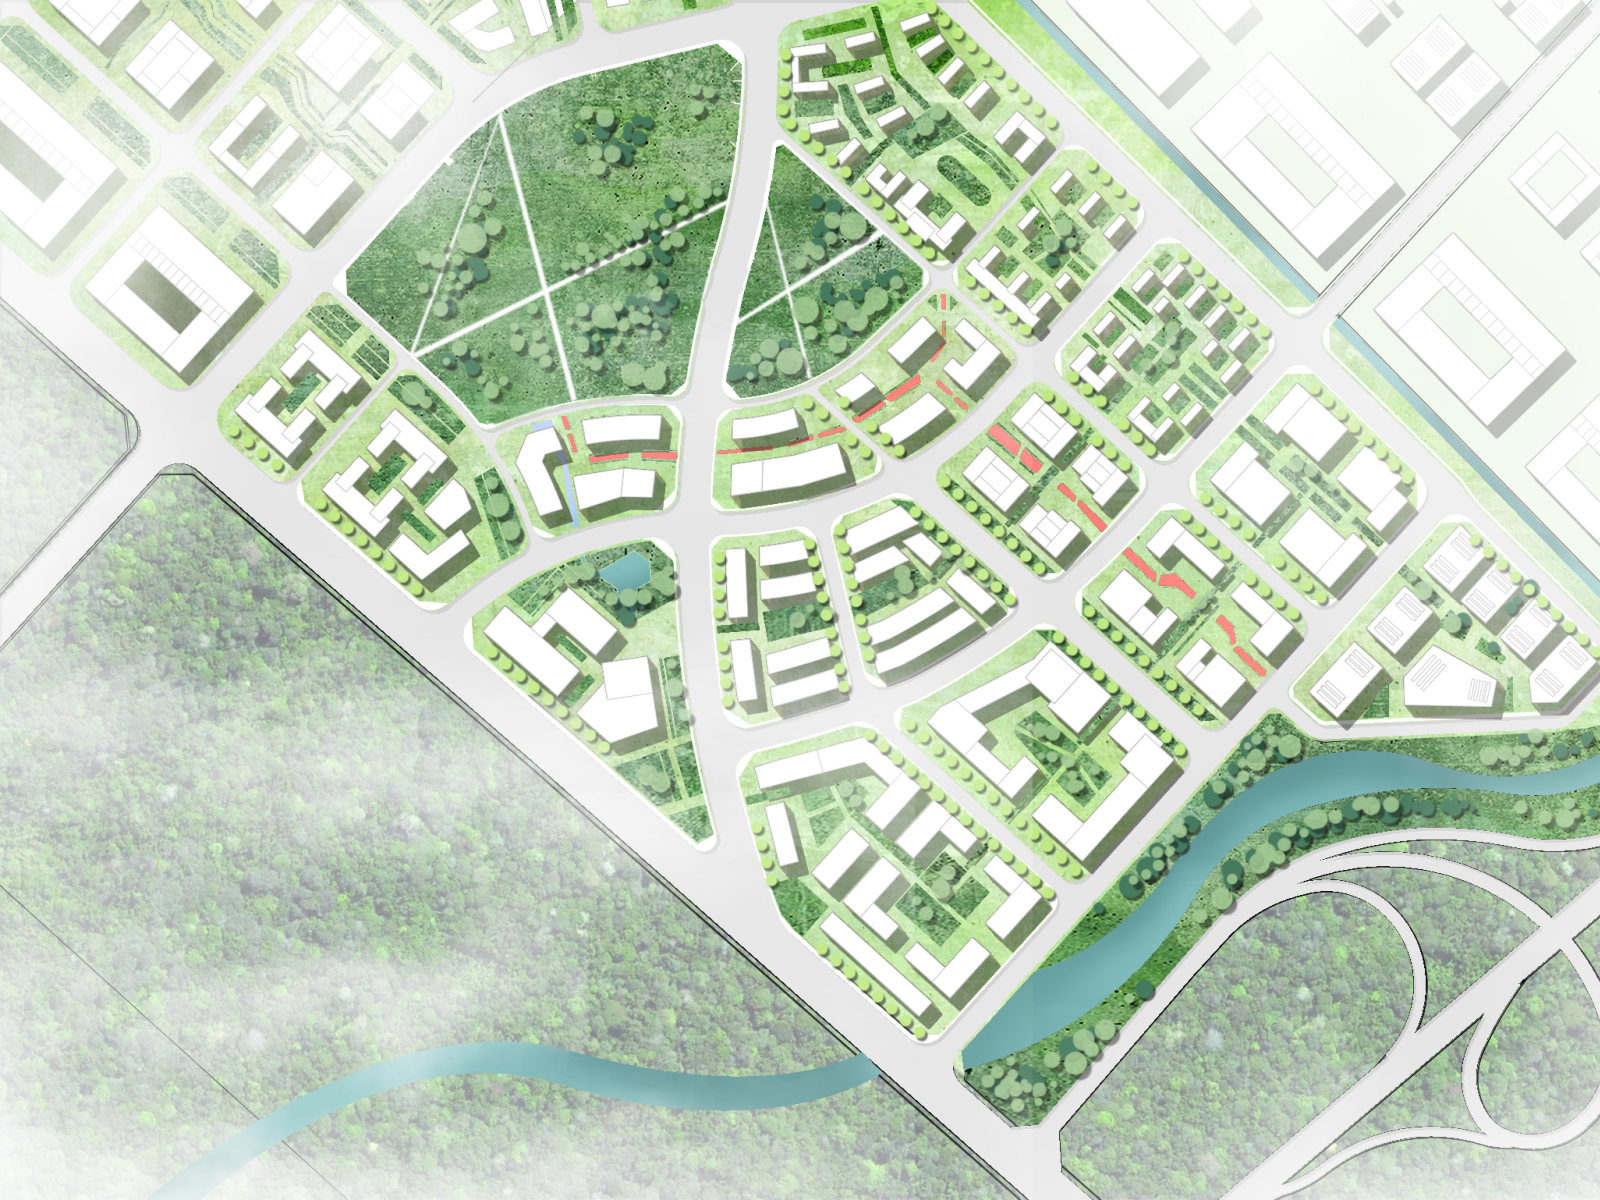 Urban Design Master Plan Rendering by Land Space on Dribbble